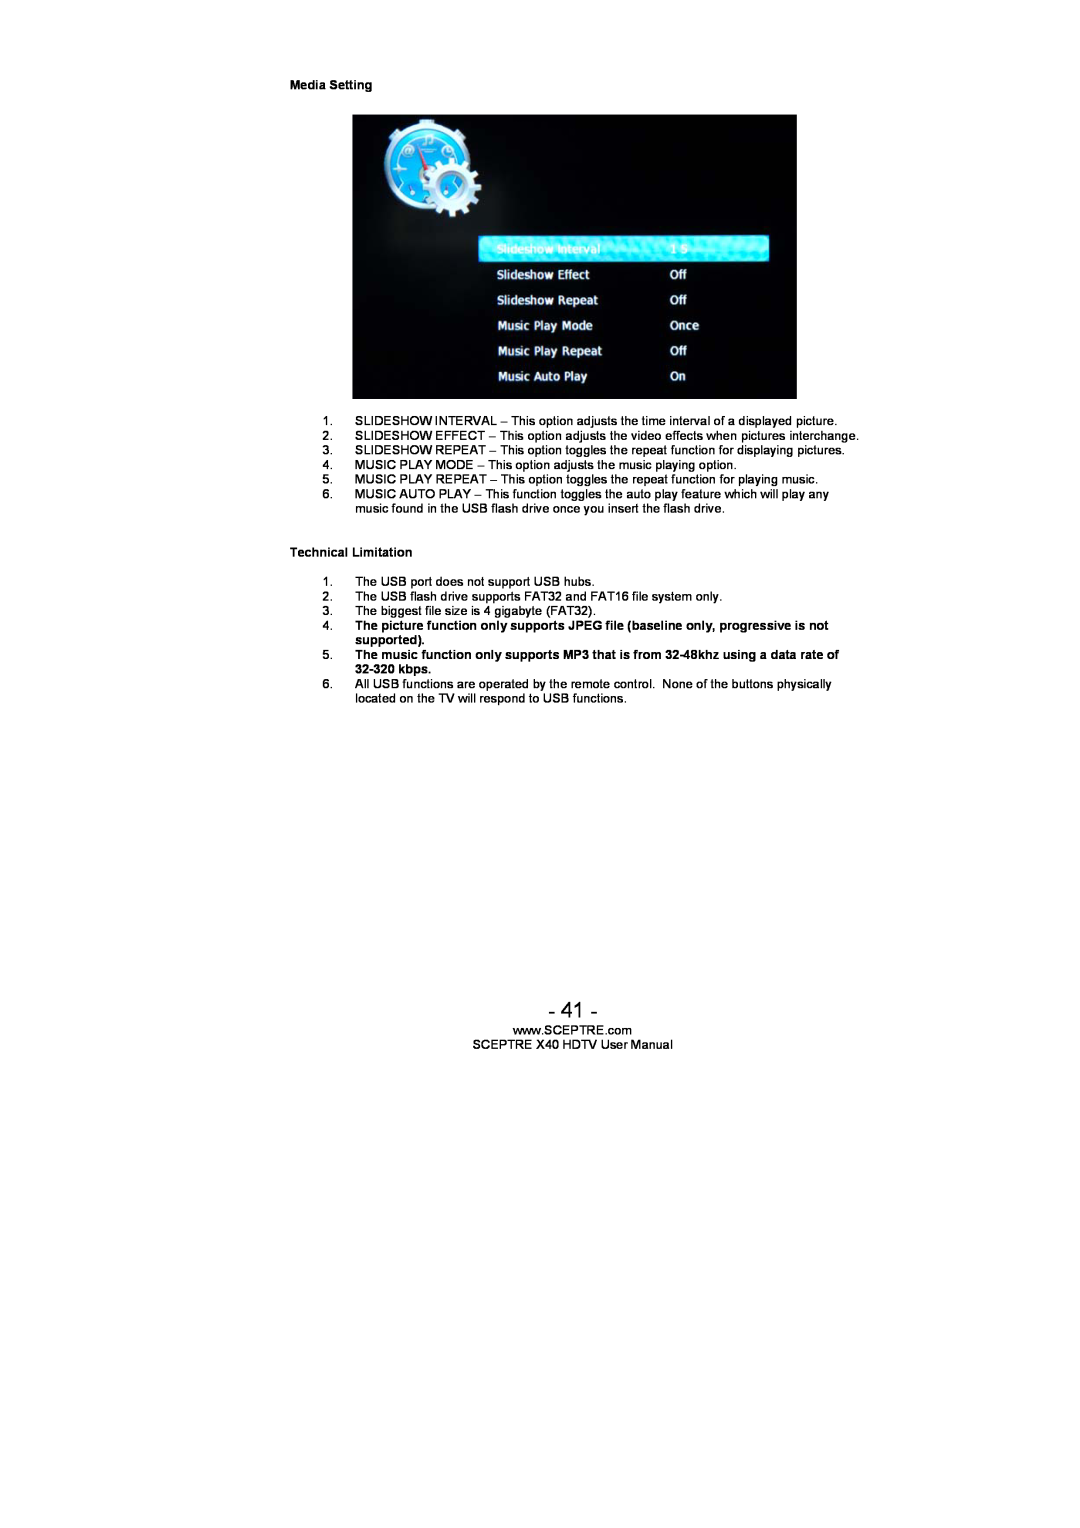 Sceptre Technologies SCEPTRE X40 HDTV user manual Media Setting, Technical Limitation 